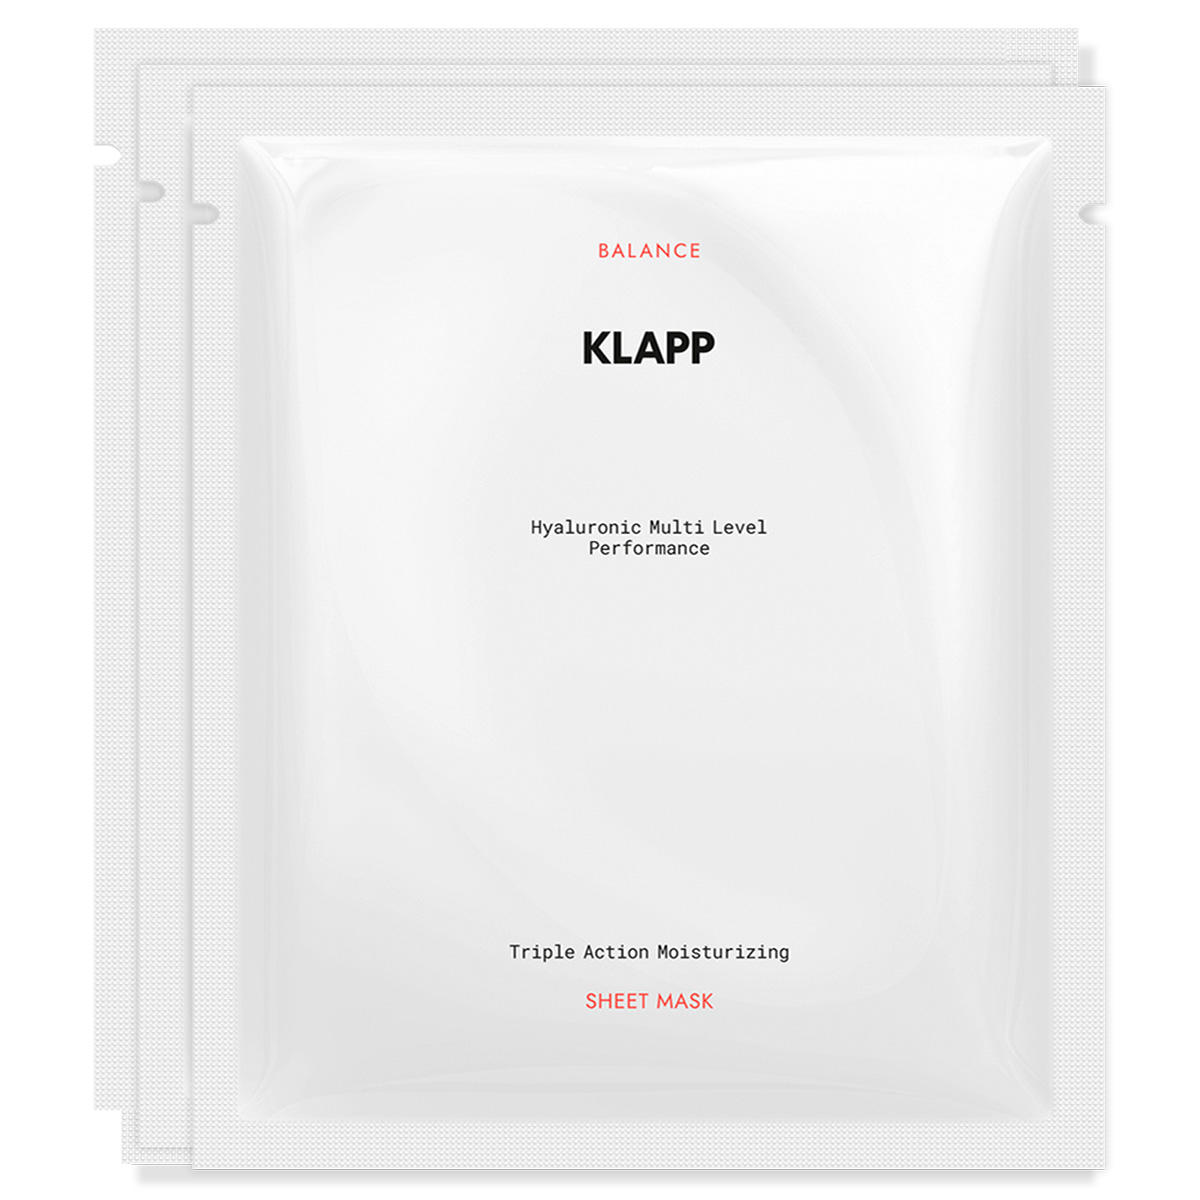 KLAPP Hyaluronic Multi Level Performance Triple Action Moisturizing Sheet Mask Pro Packung 3 Stück - 1